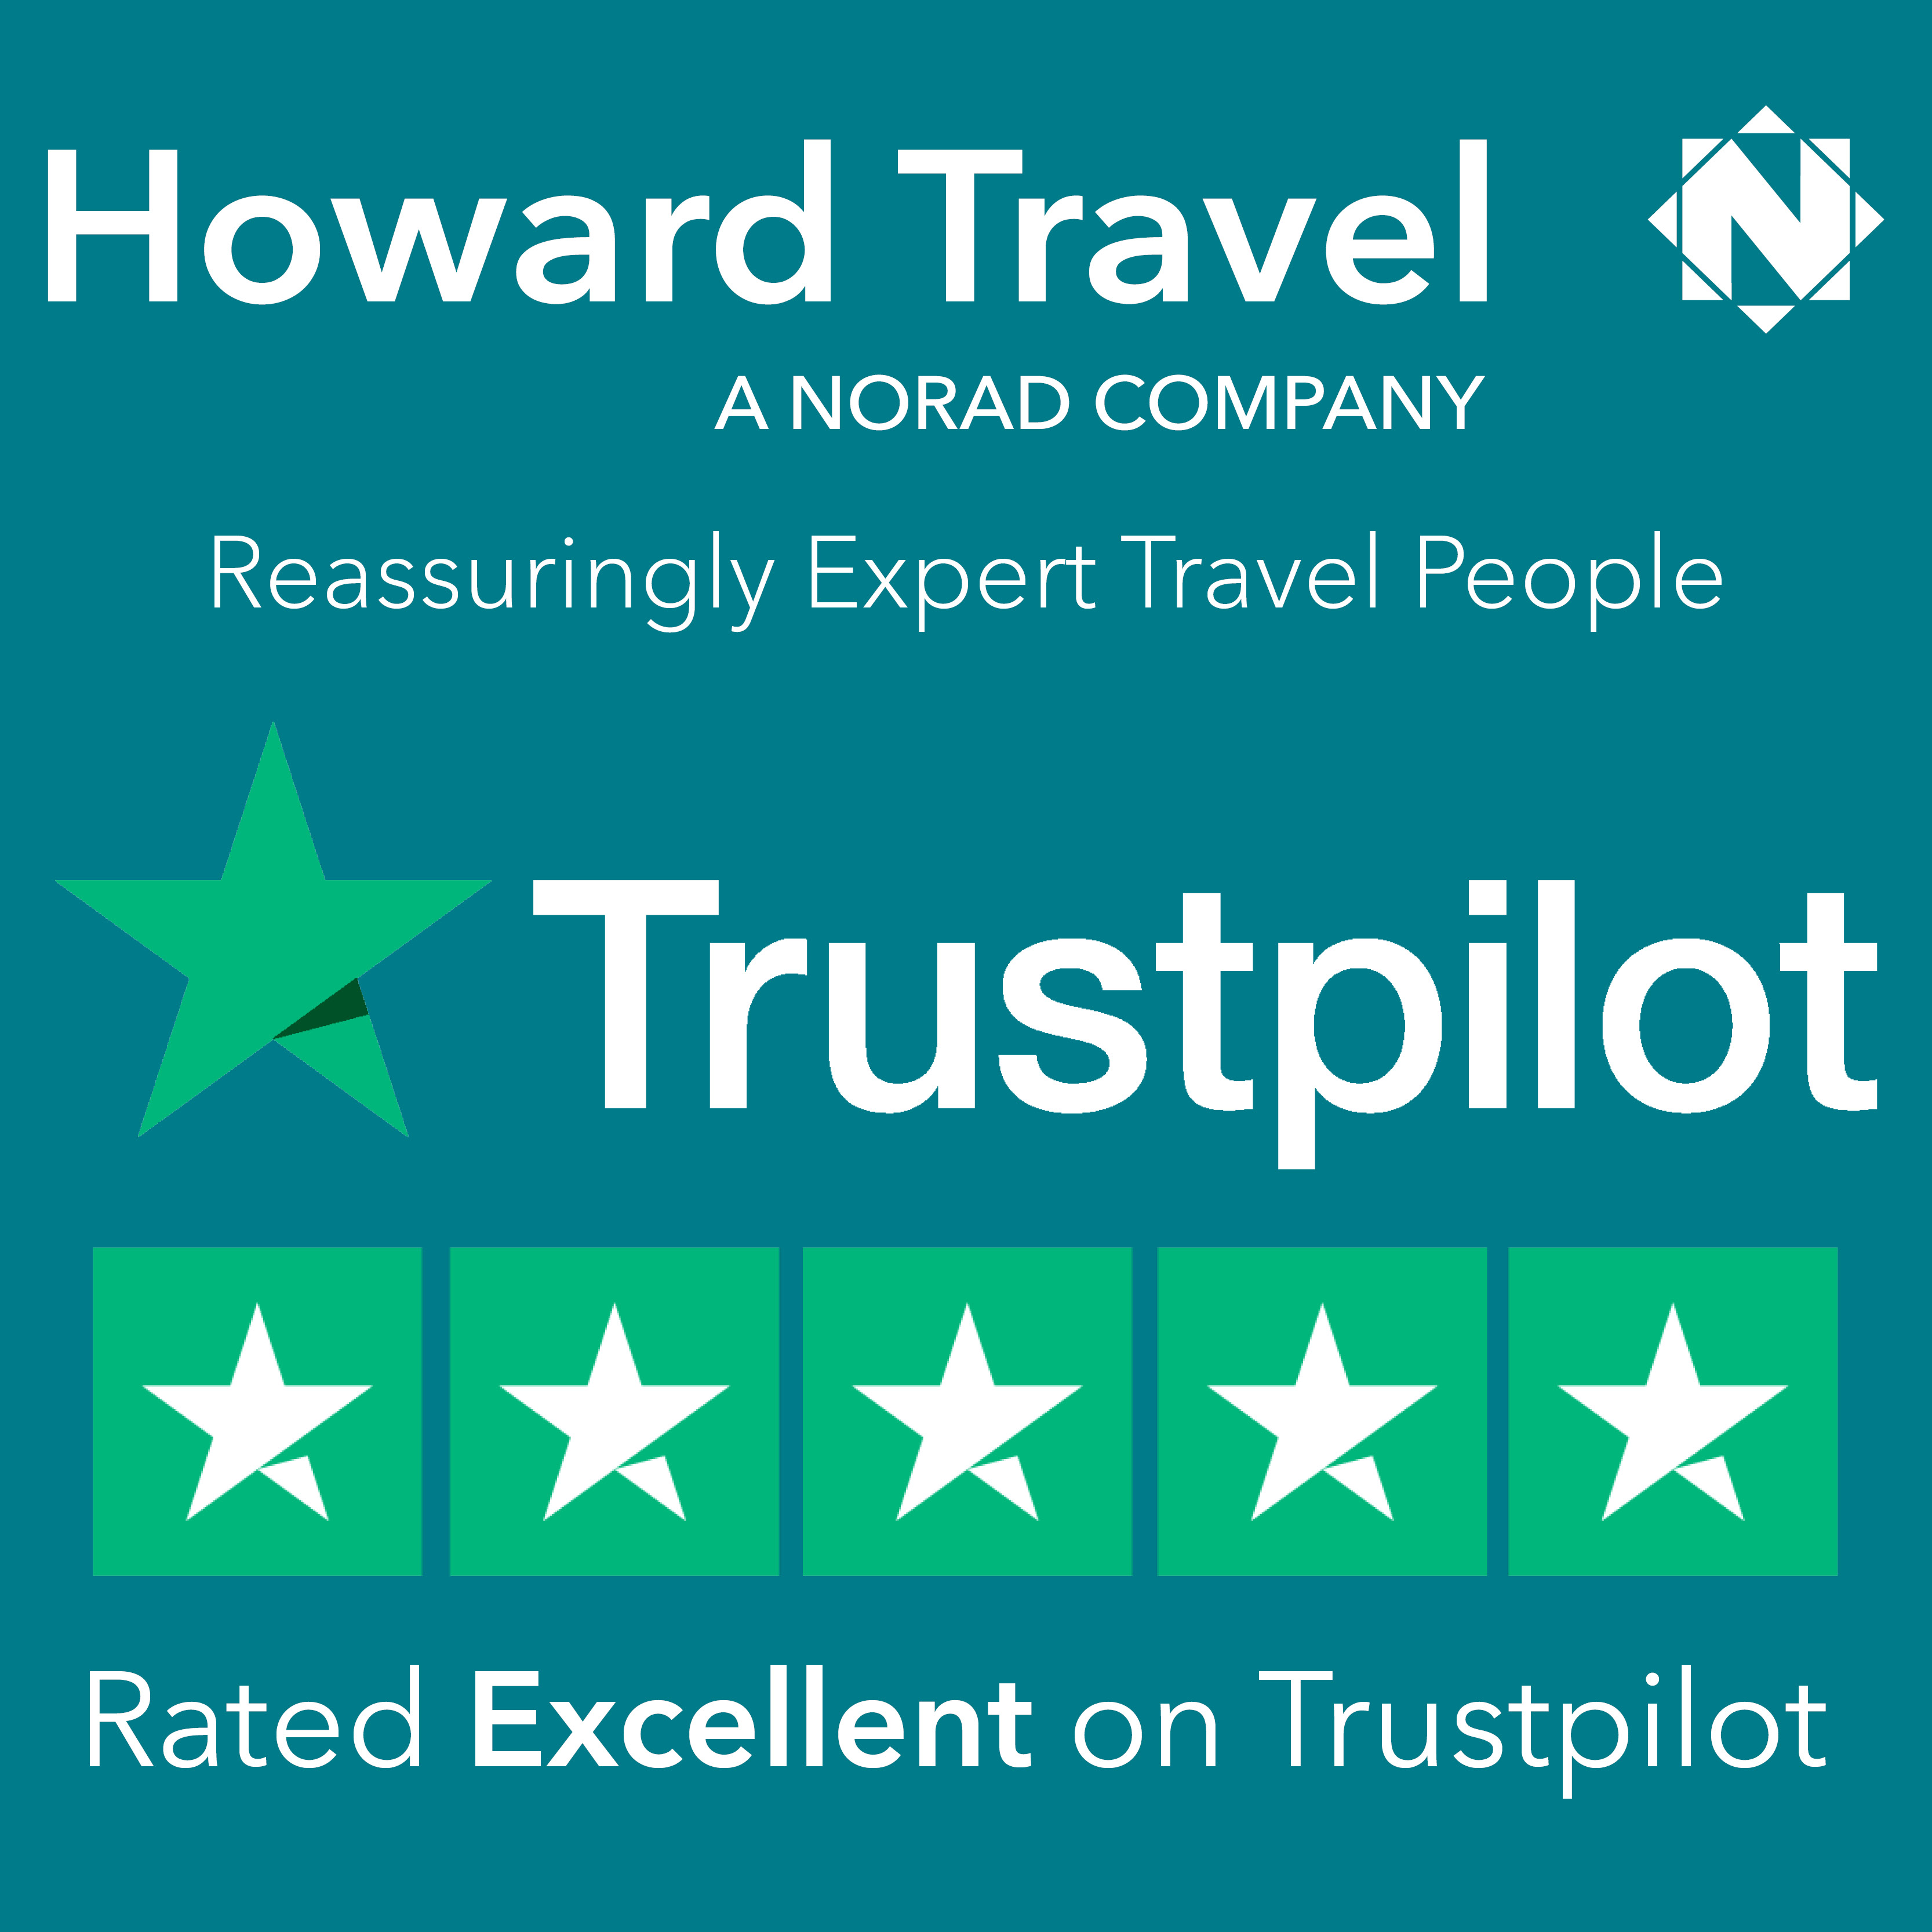 Howard Travel, Reassuringly Expert Travel People, Trustpilot